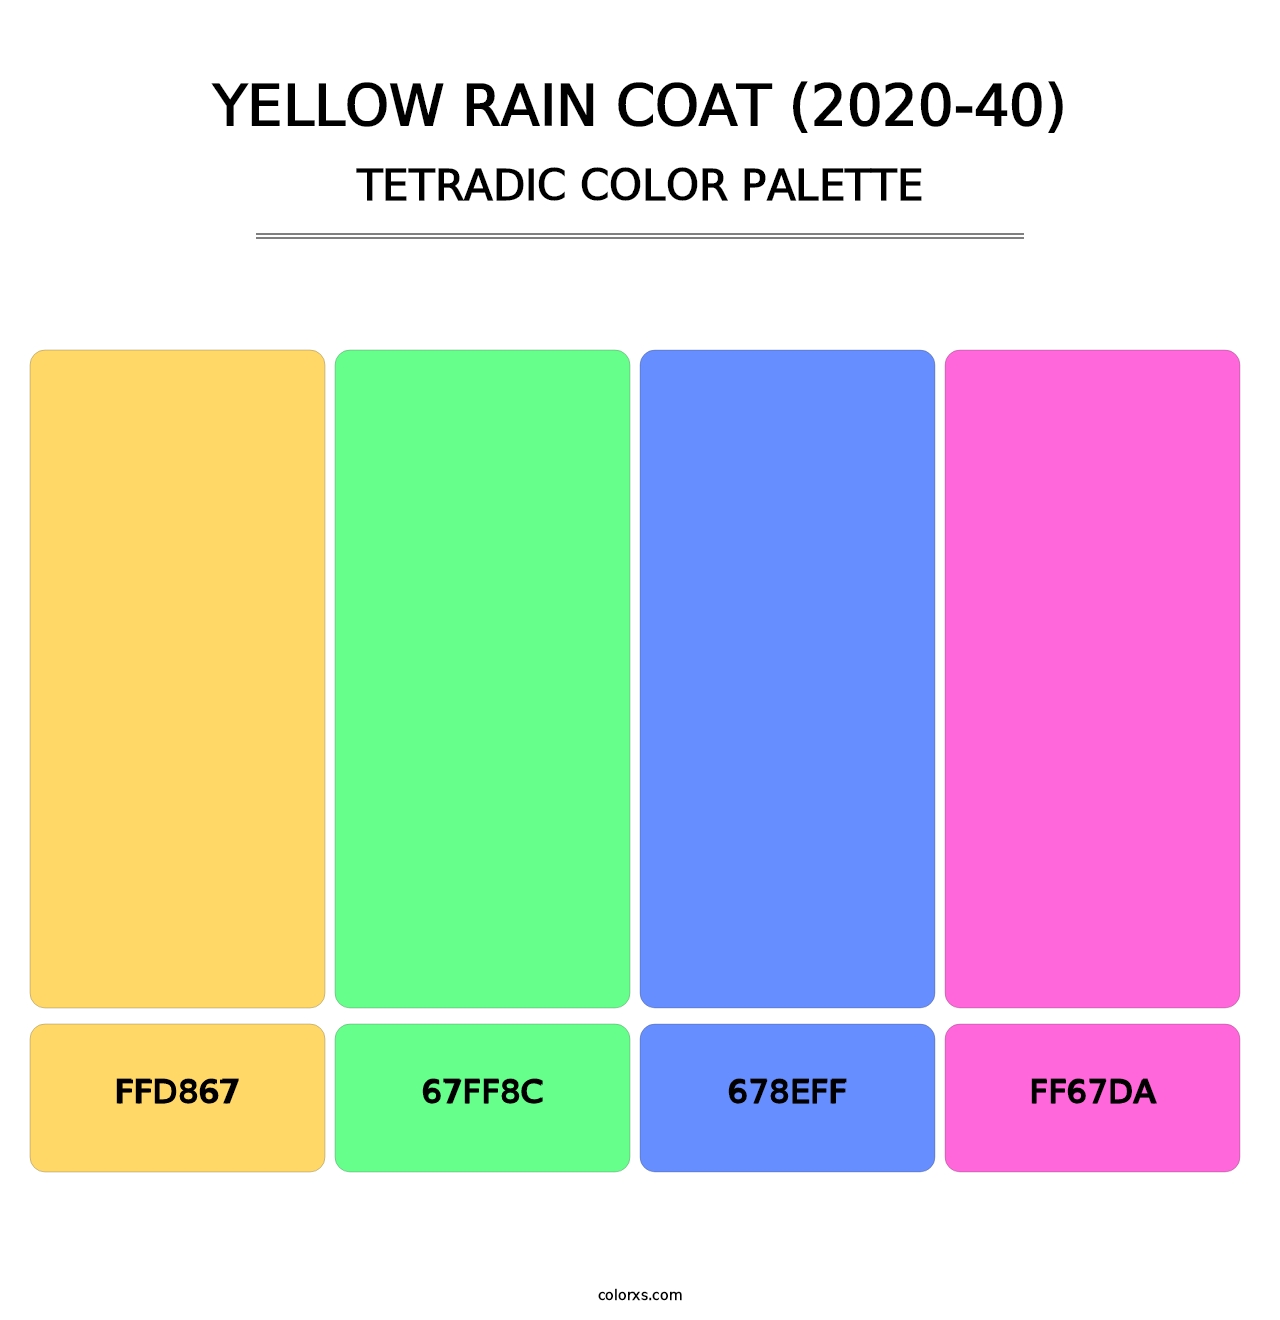 Yellow Rain Coat (2020-40) - Tetradic Color Palette